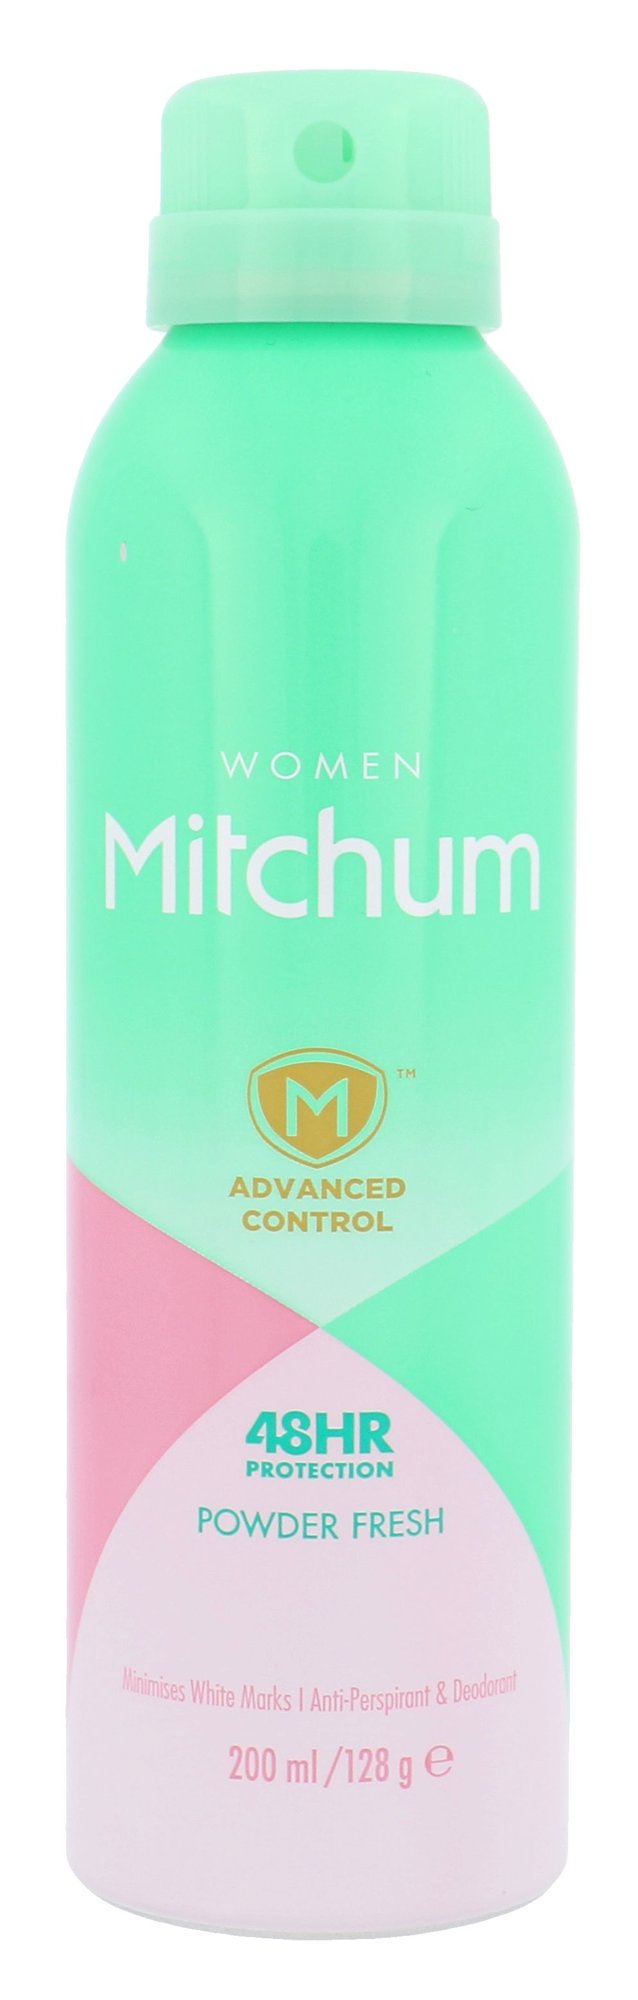 Mitchum Powder Fresh Anti-Perspirant Deo Spray 48HR